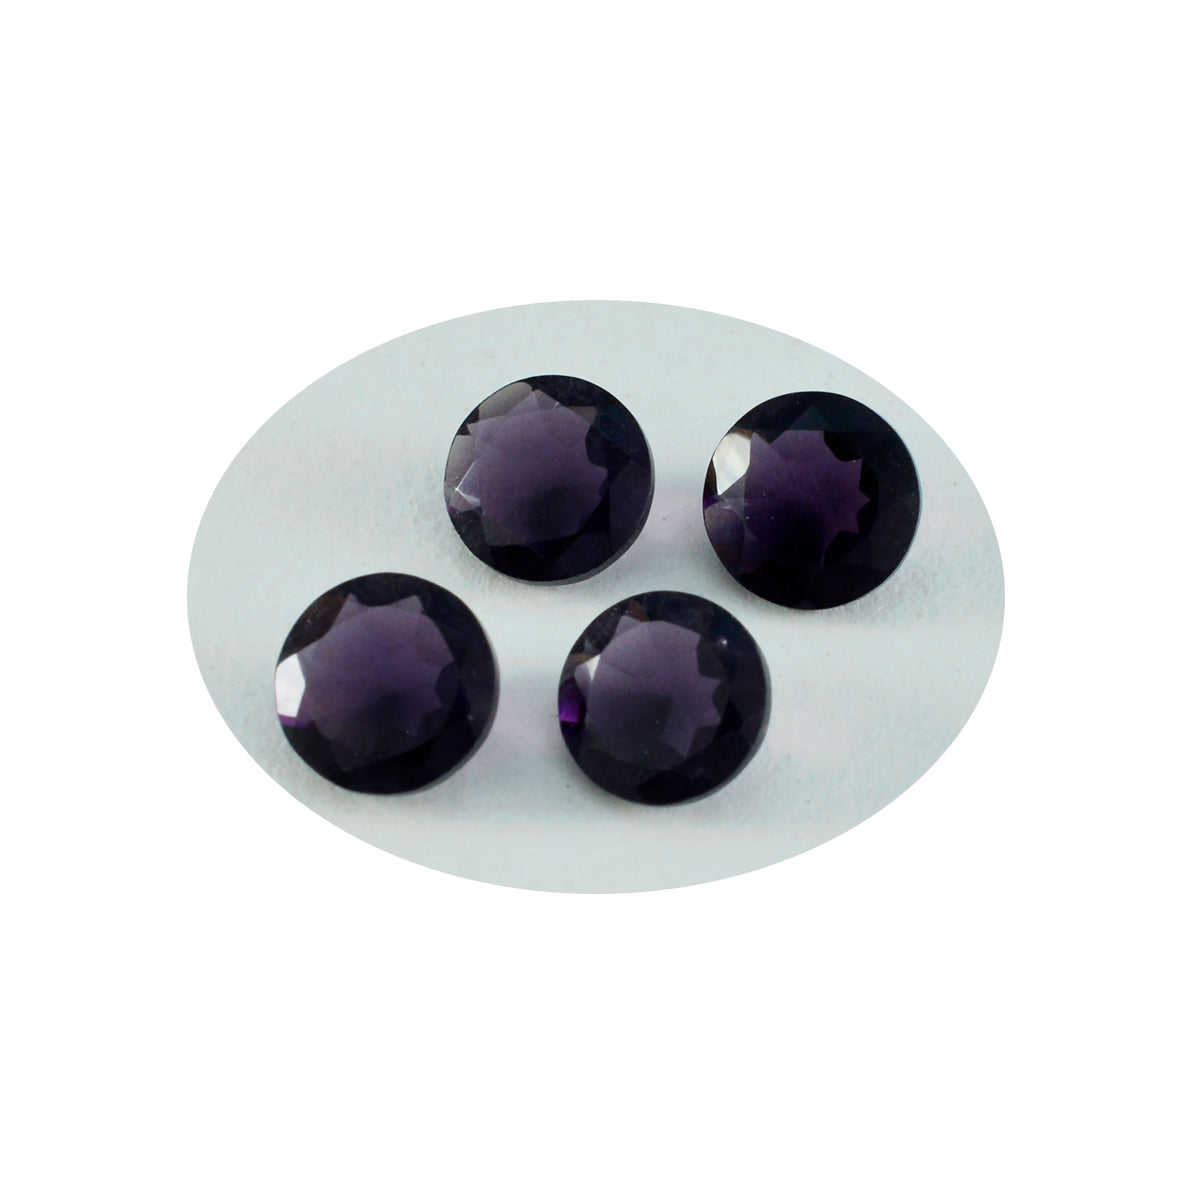 Riyogems 1PC Purple Amethyst CZ Faceted 14x14 mm Round Shape handsome Quality Loose Gem